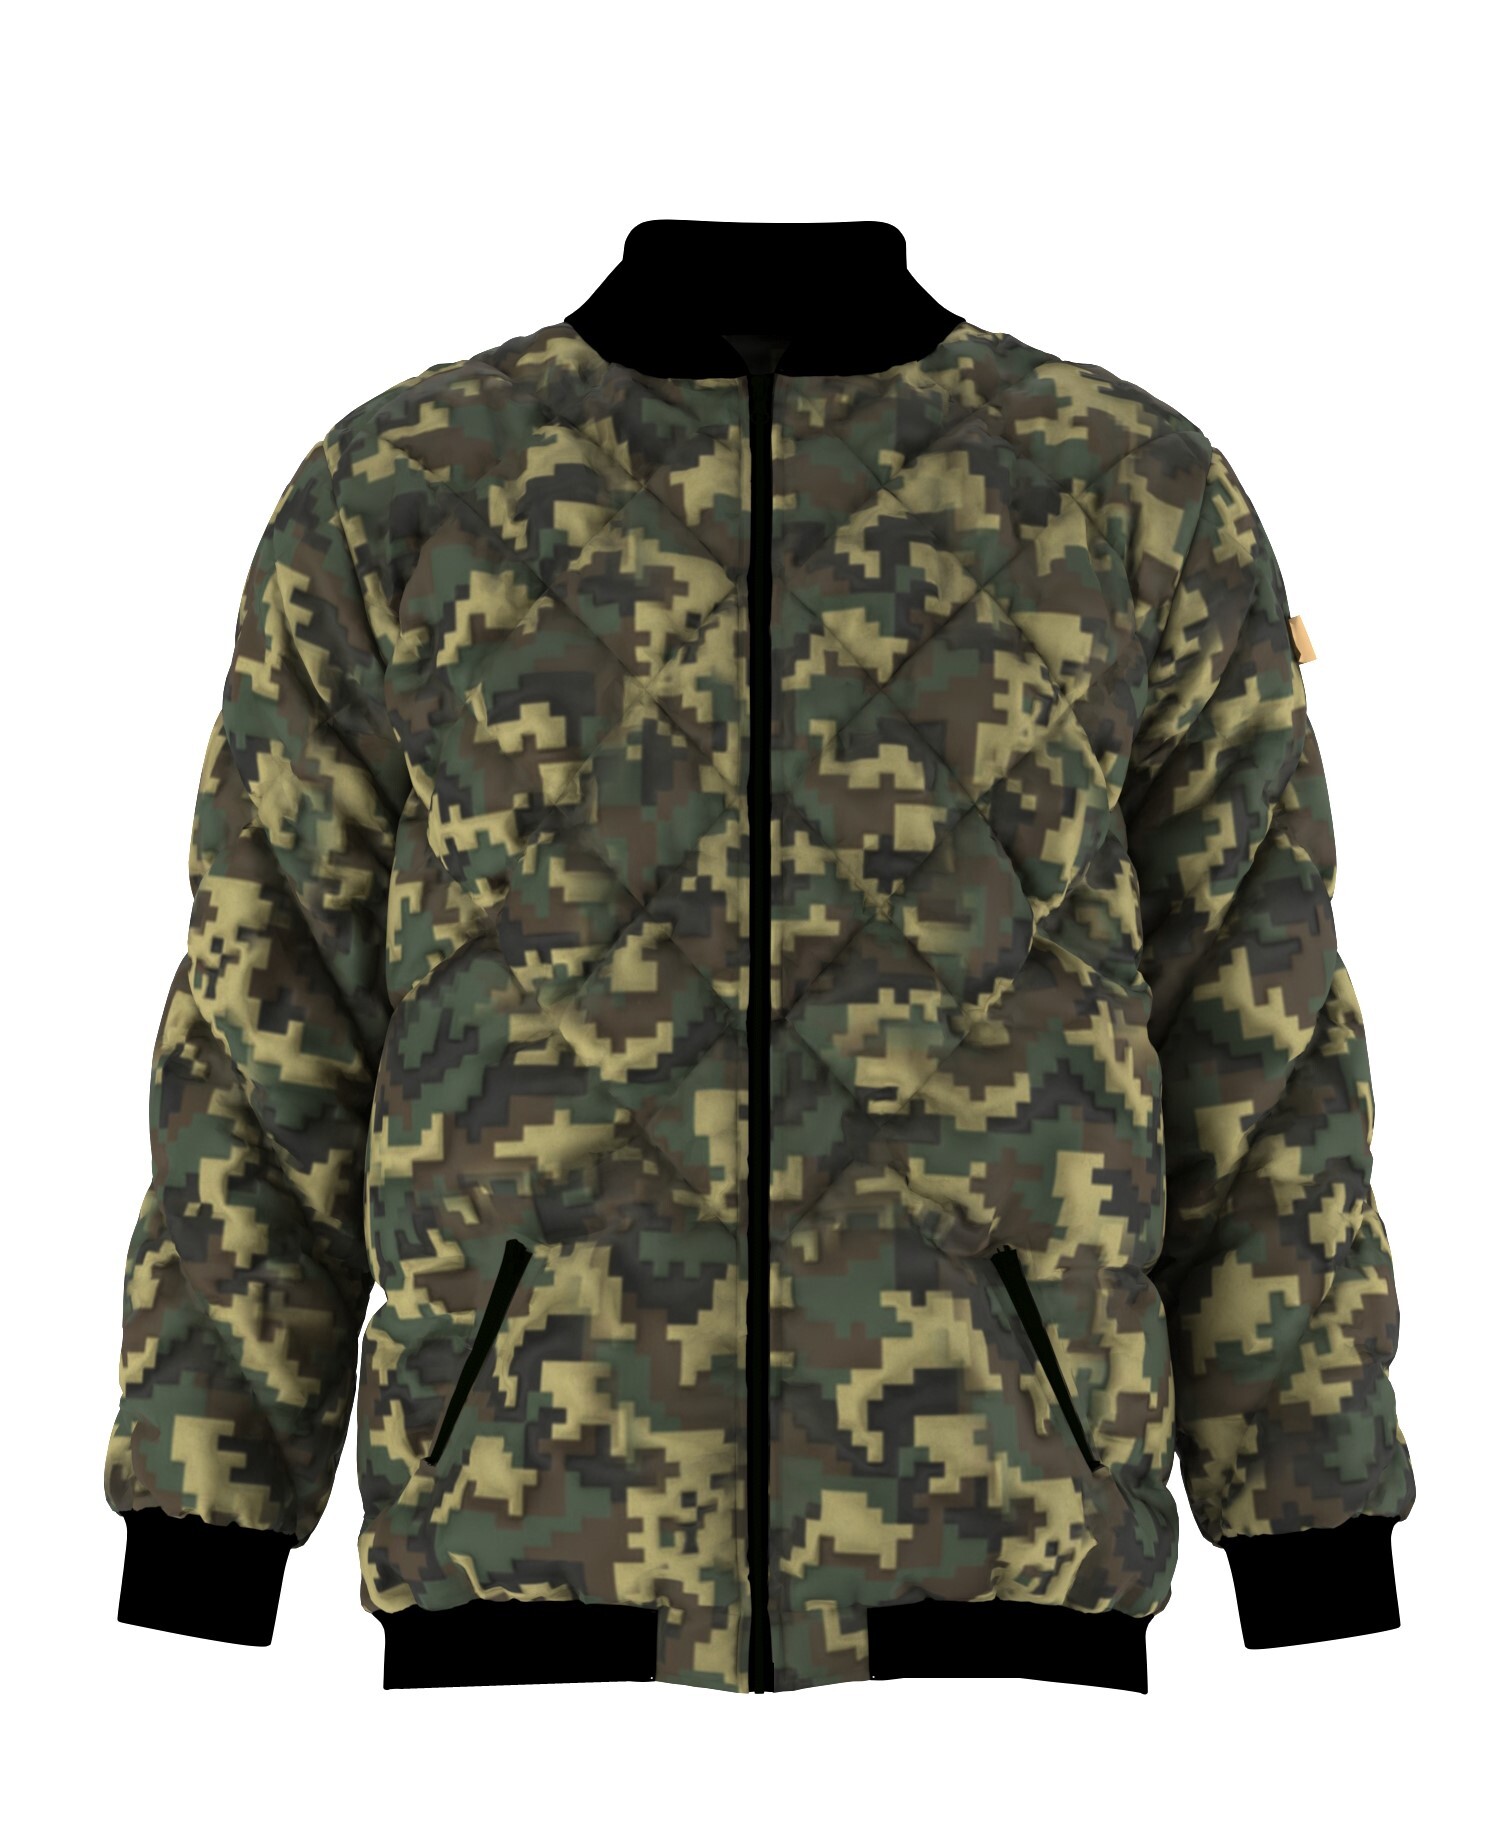 ArtStation - 3D Camouflage boomber jacket